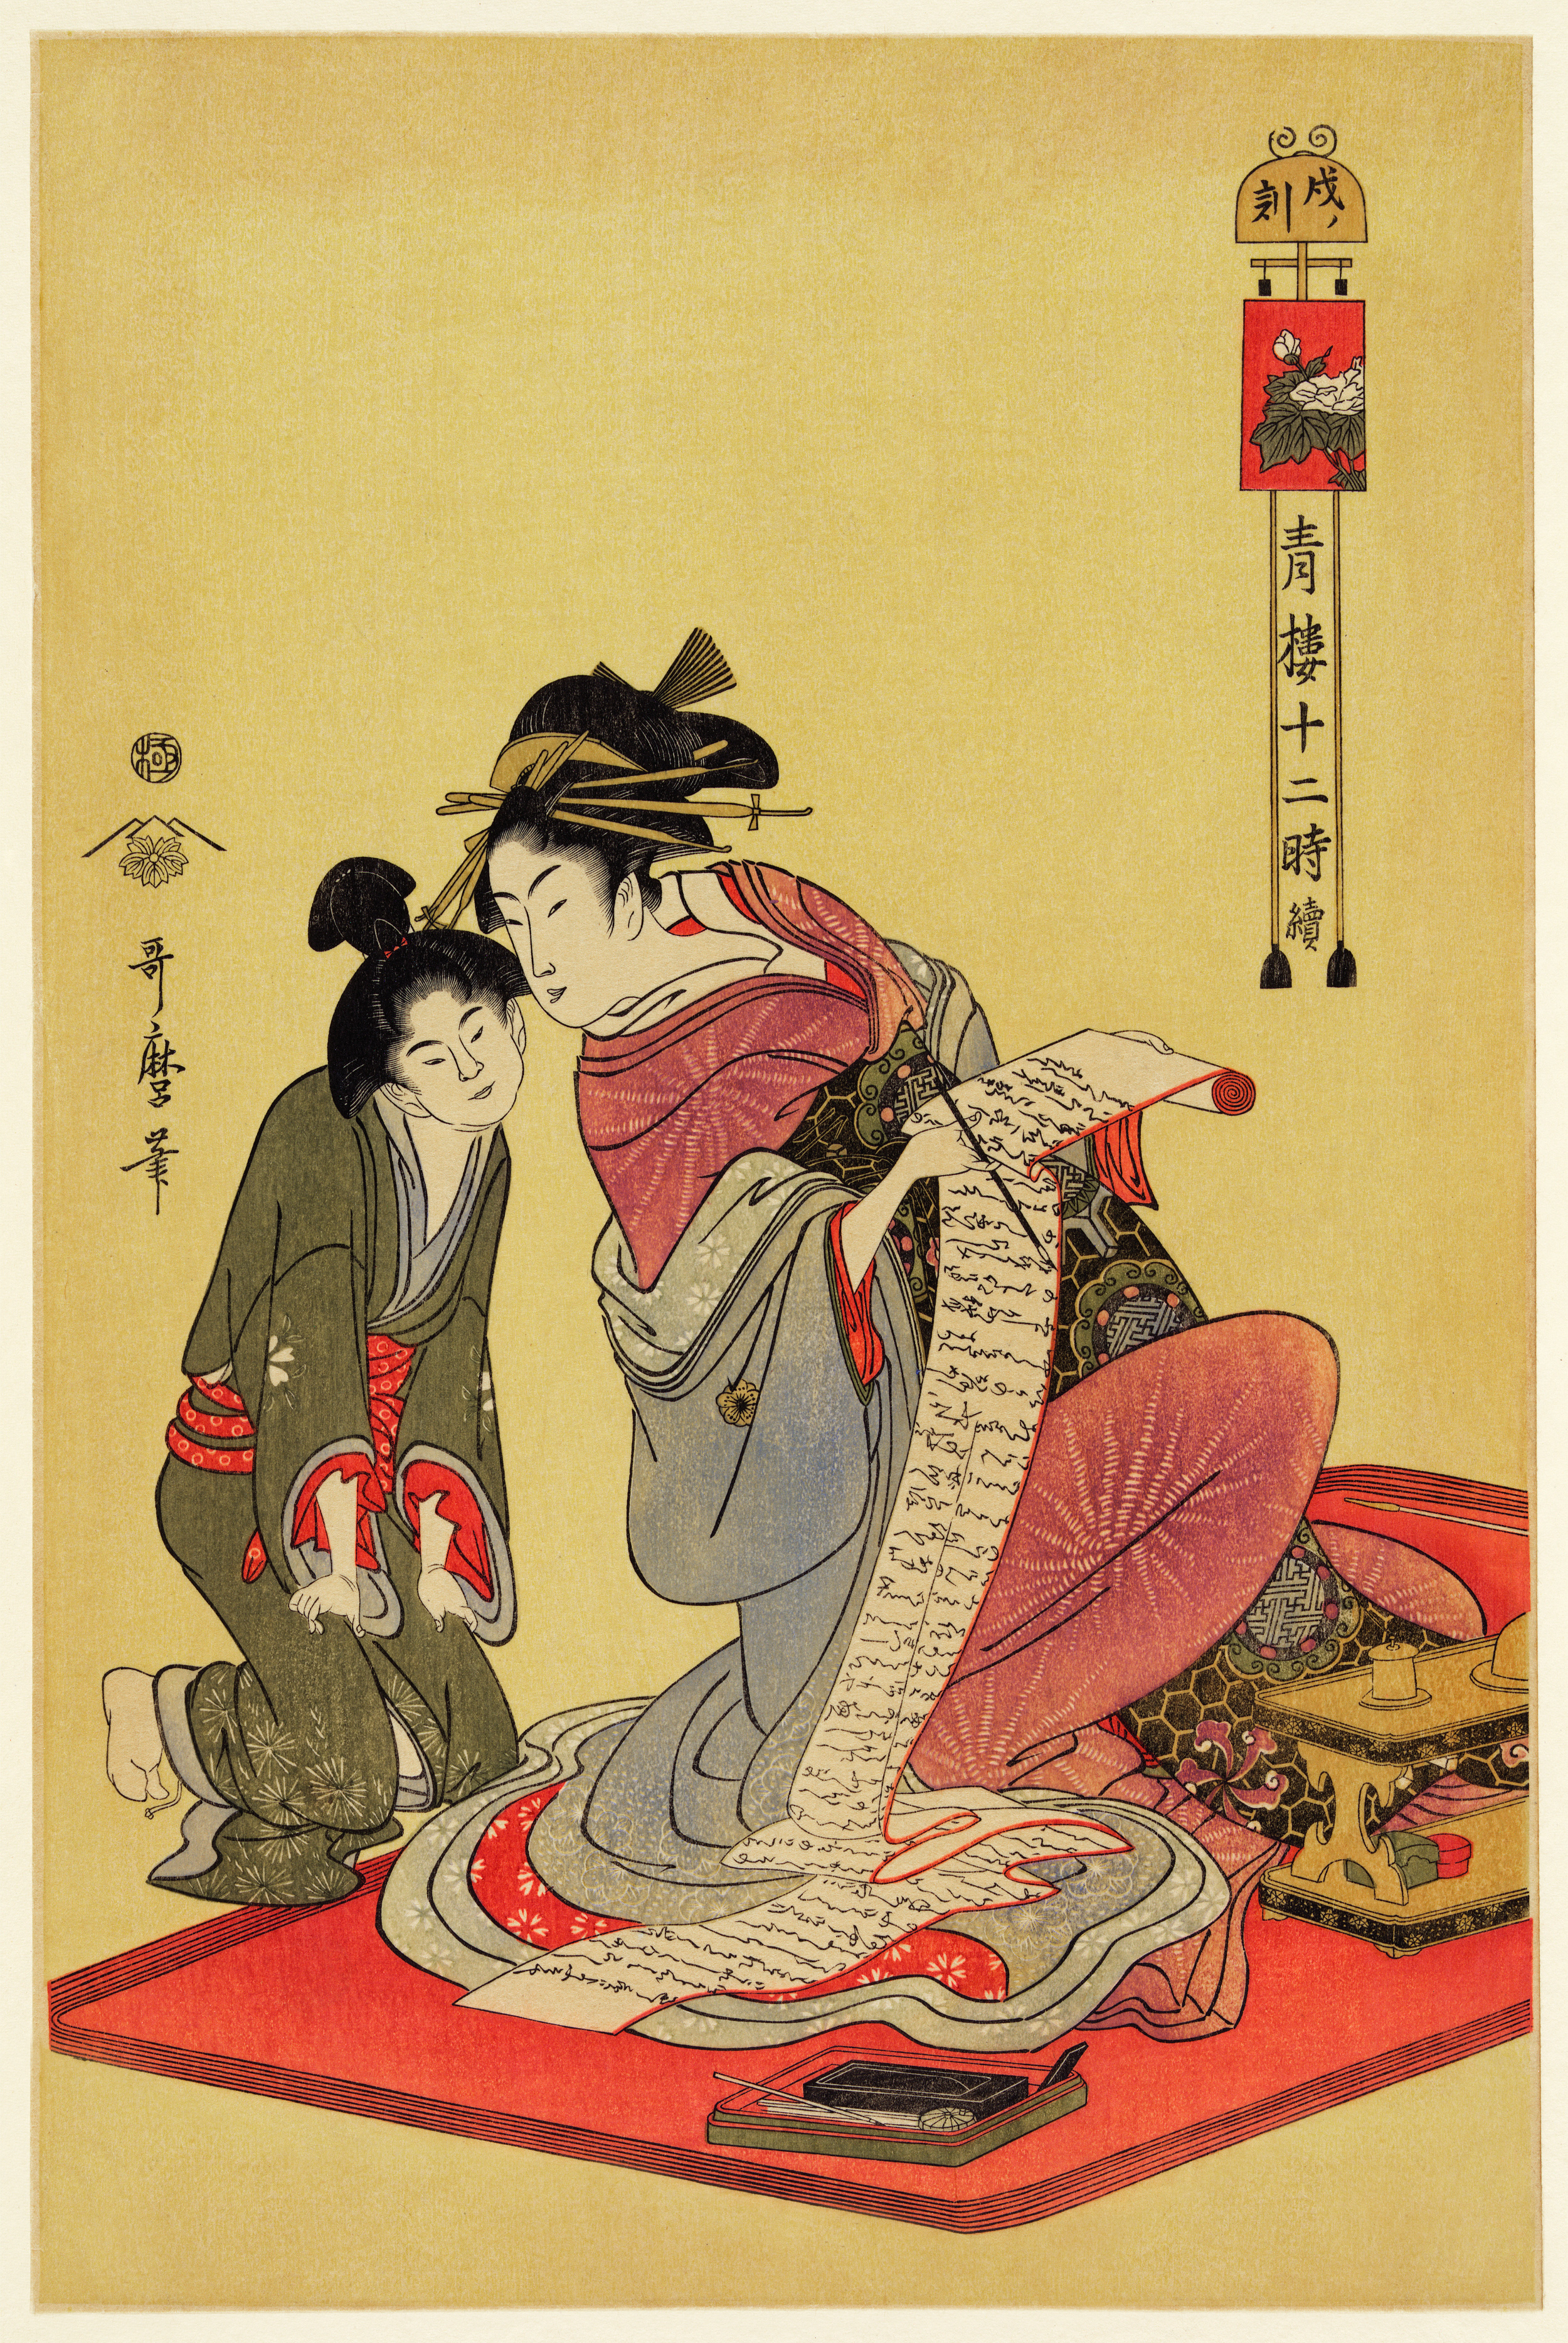 https://upload.wikimedia.org/wikipedia/commons/8/81/Ukiyo-e_illustration_by_Utamaro_Kitagawa%2C_digitally_enhanced_by_rawpixel-com_13.jpg